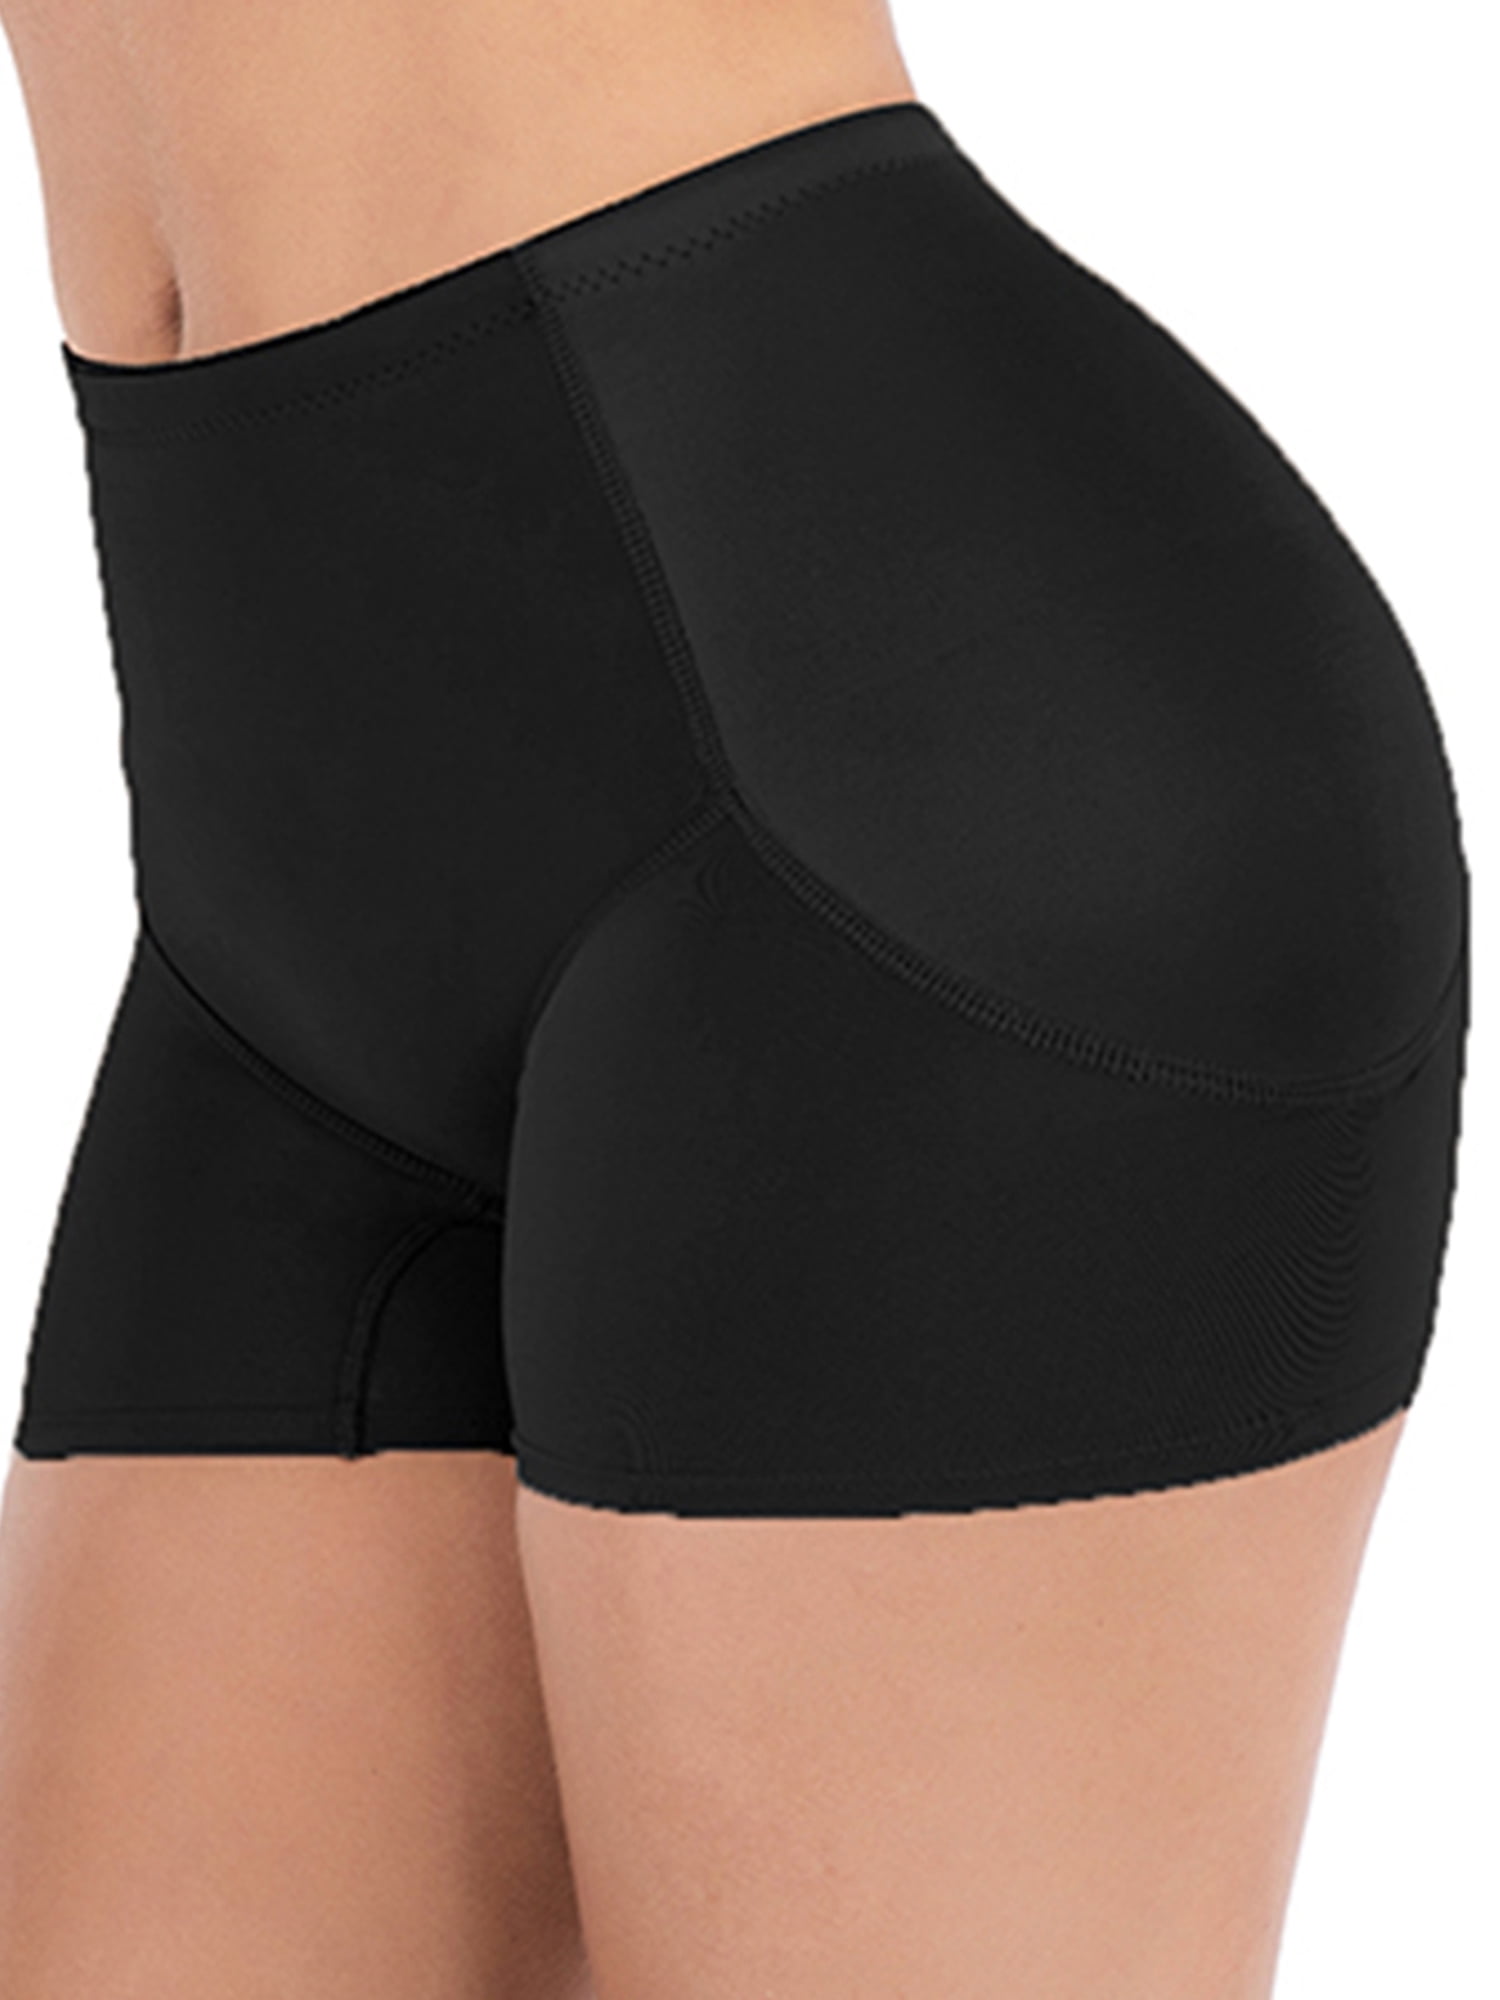 SAYFUT Butt Lifter Hip Enhancer Pads Underwear Fake Pad Briefs